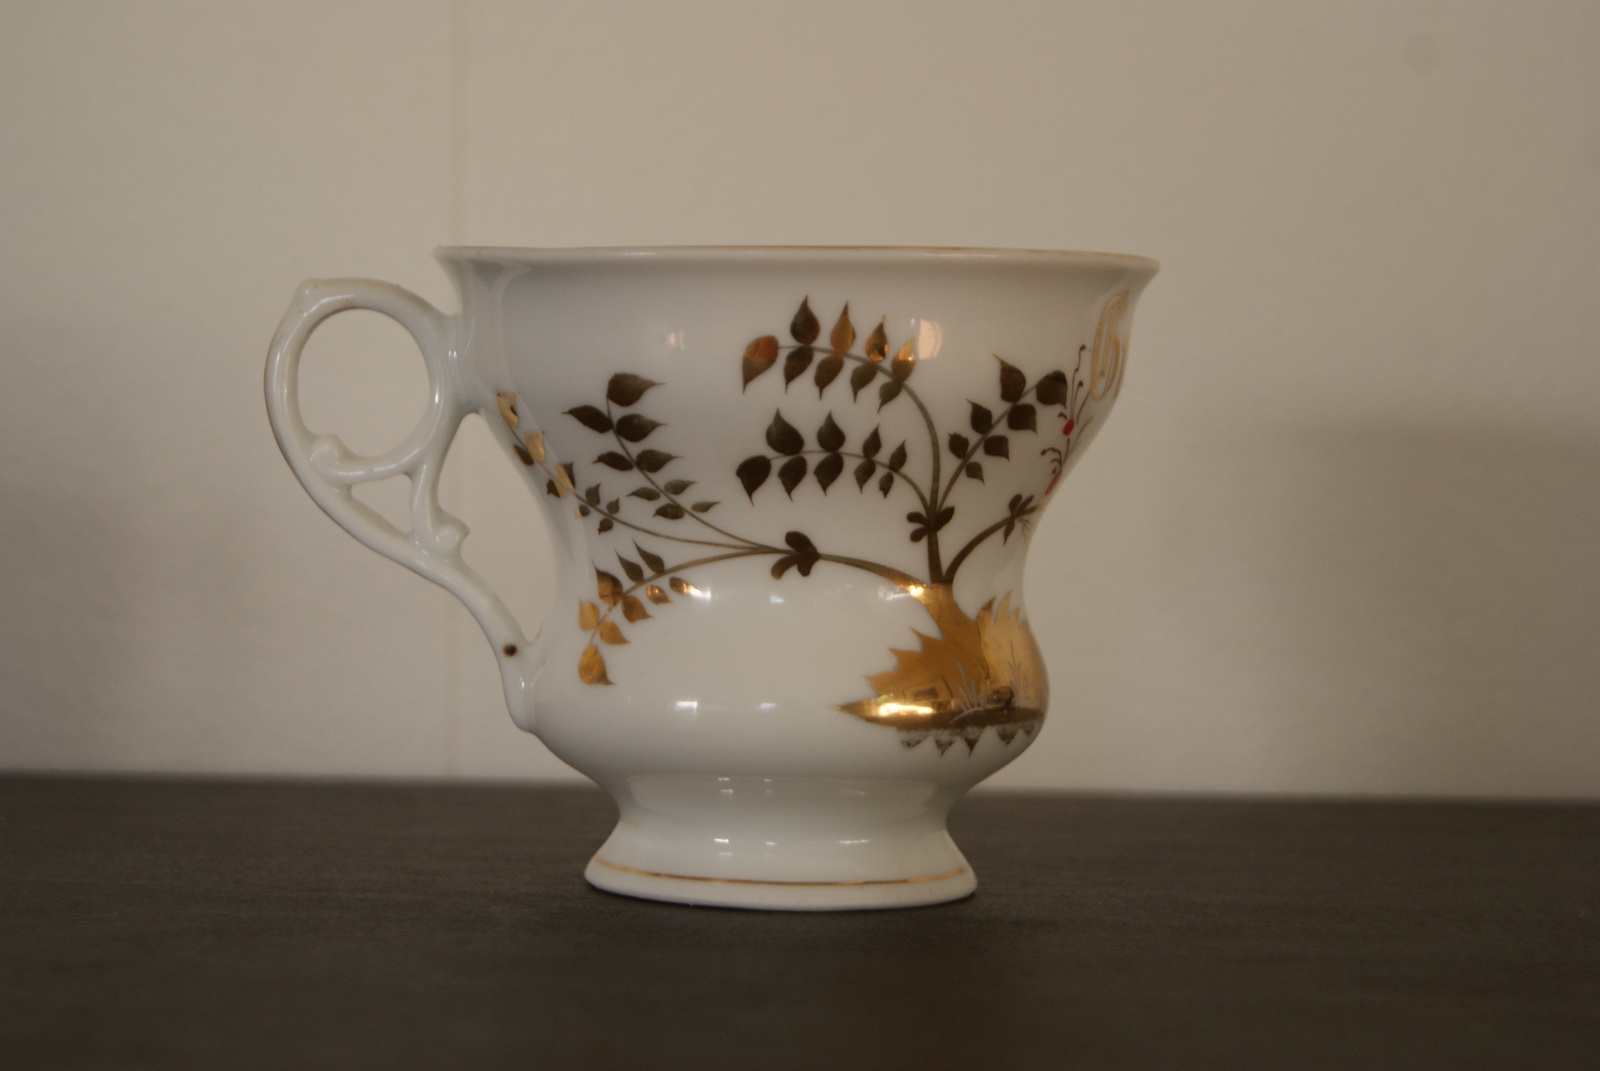 Porsgrund cup with golden decor small flowers and "Gratulerer" inscription